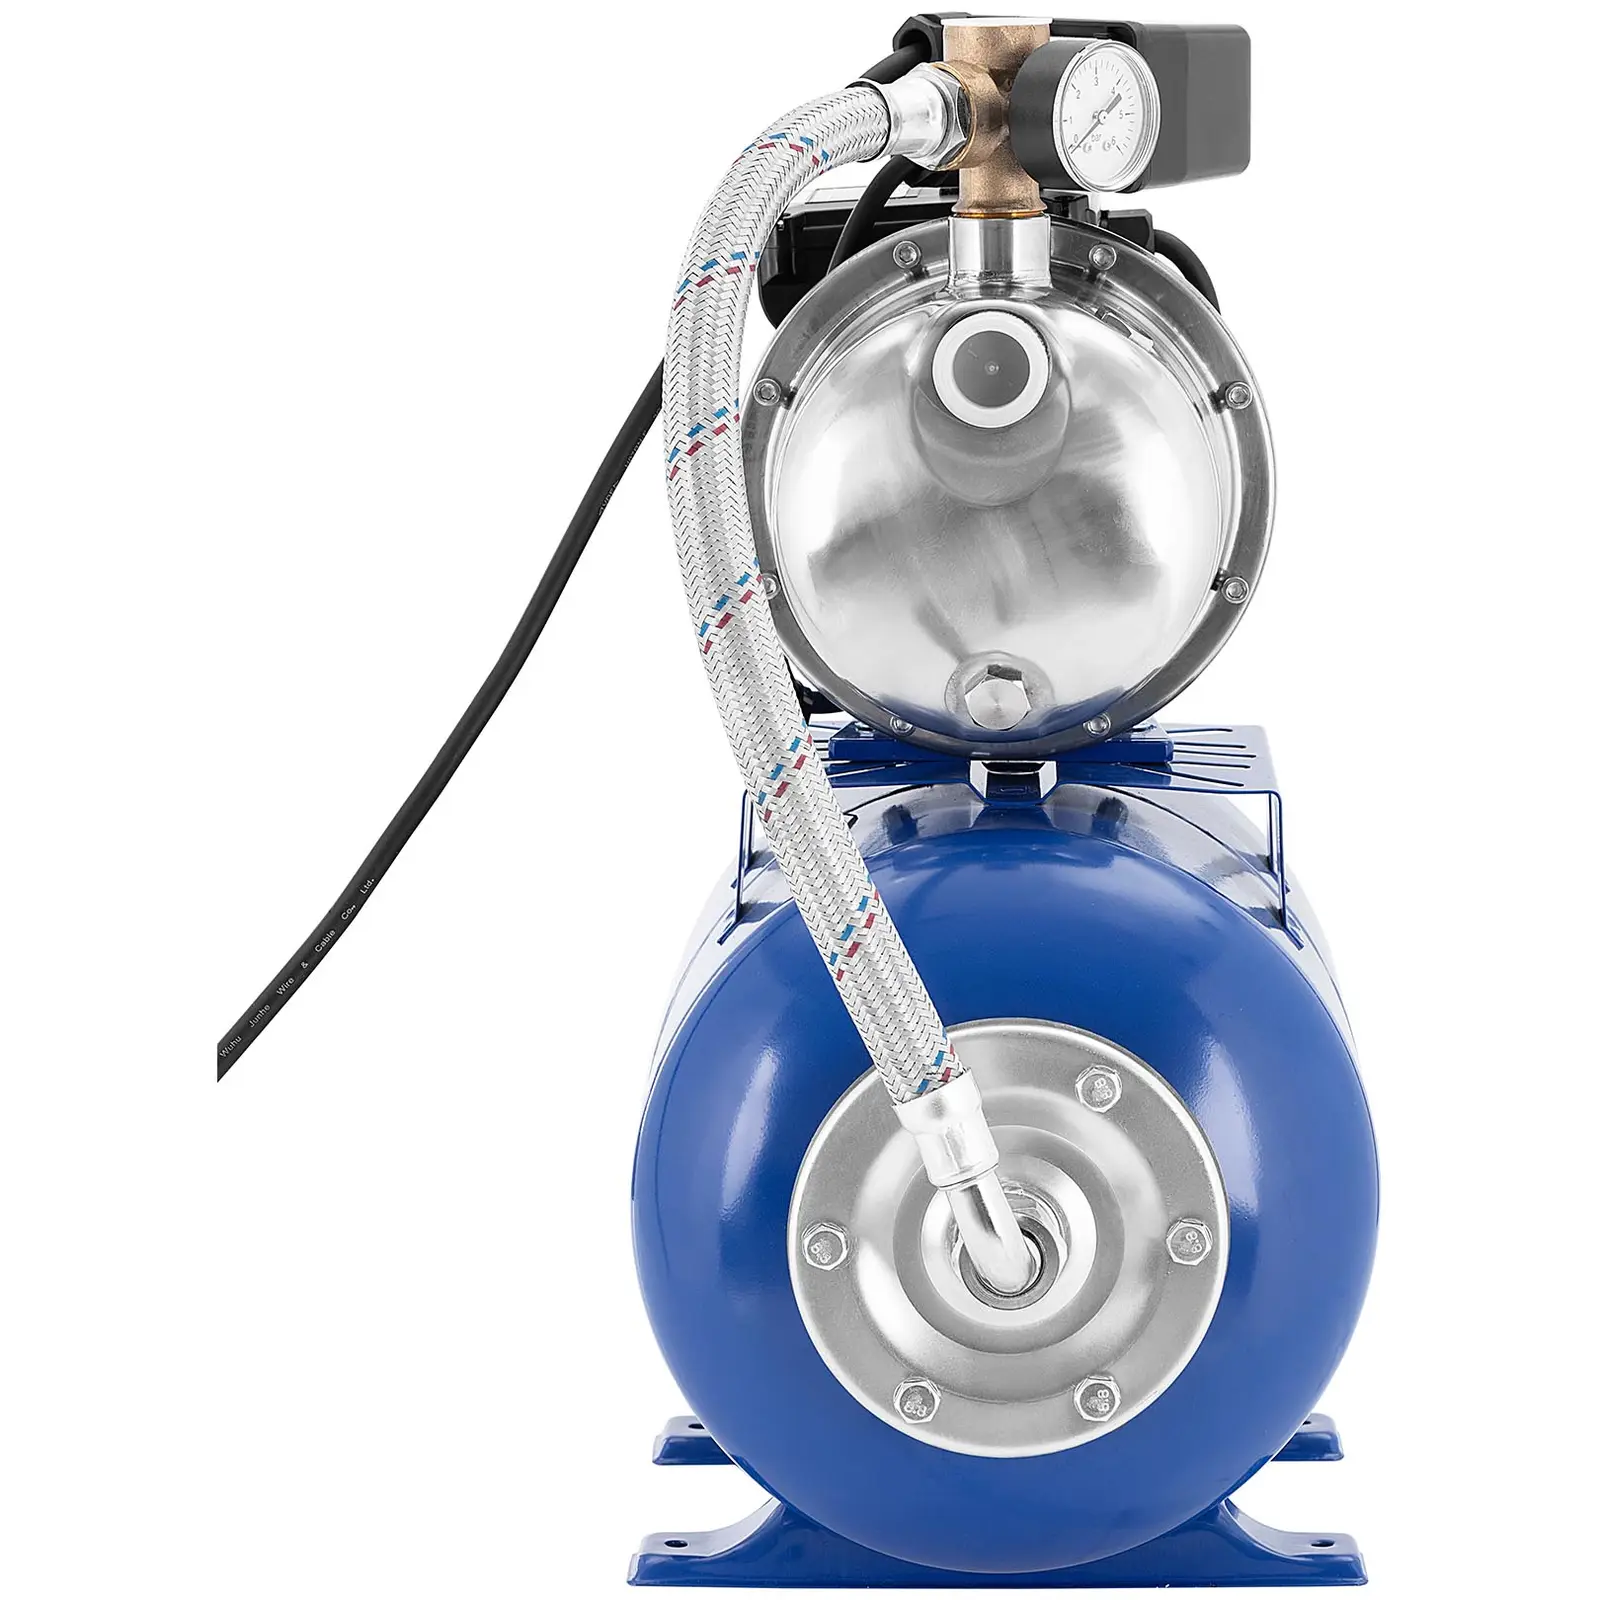 Pompa autoadescante - 1.003 W - 4,8 m³/h - Acciaio al carbonio